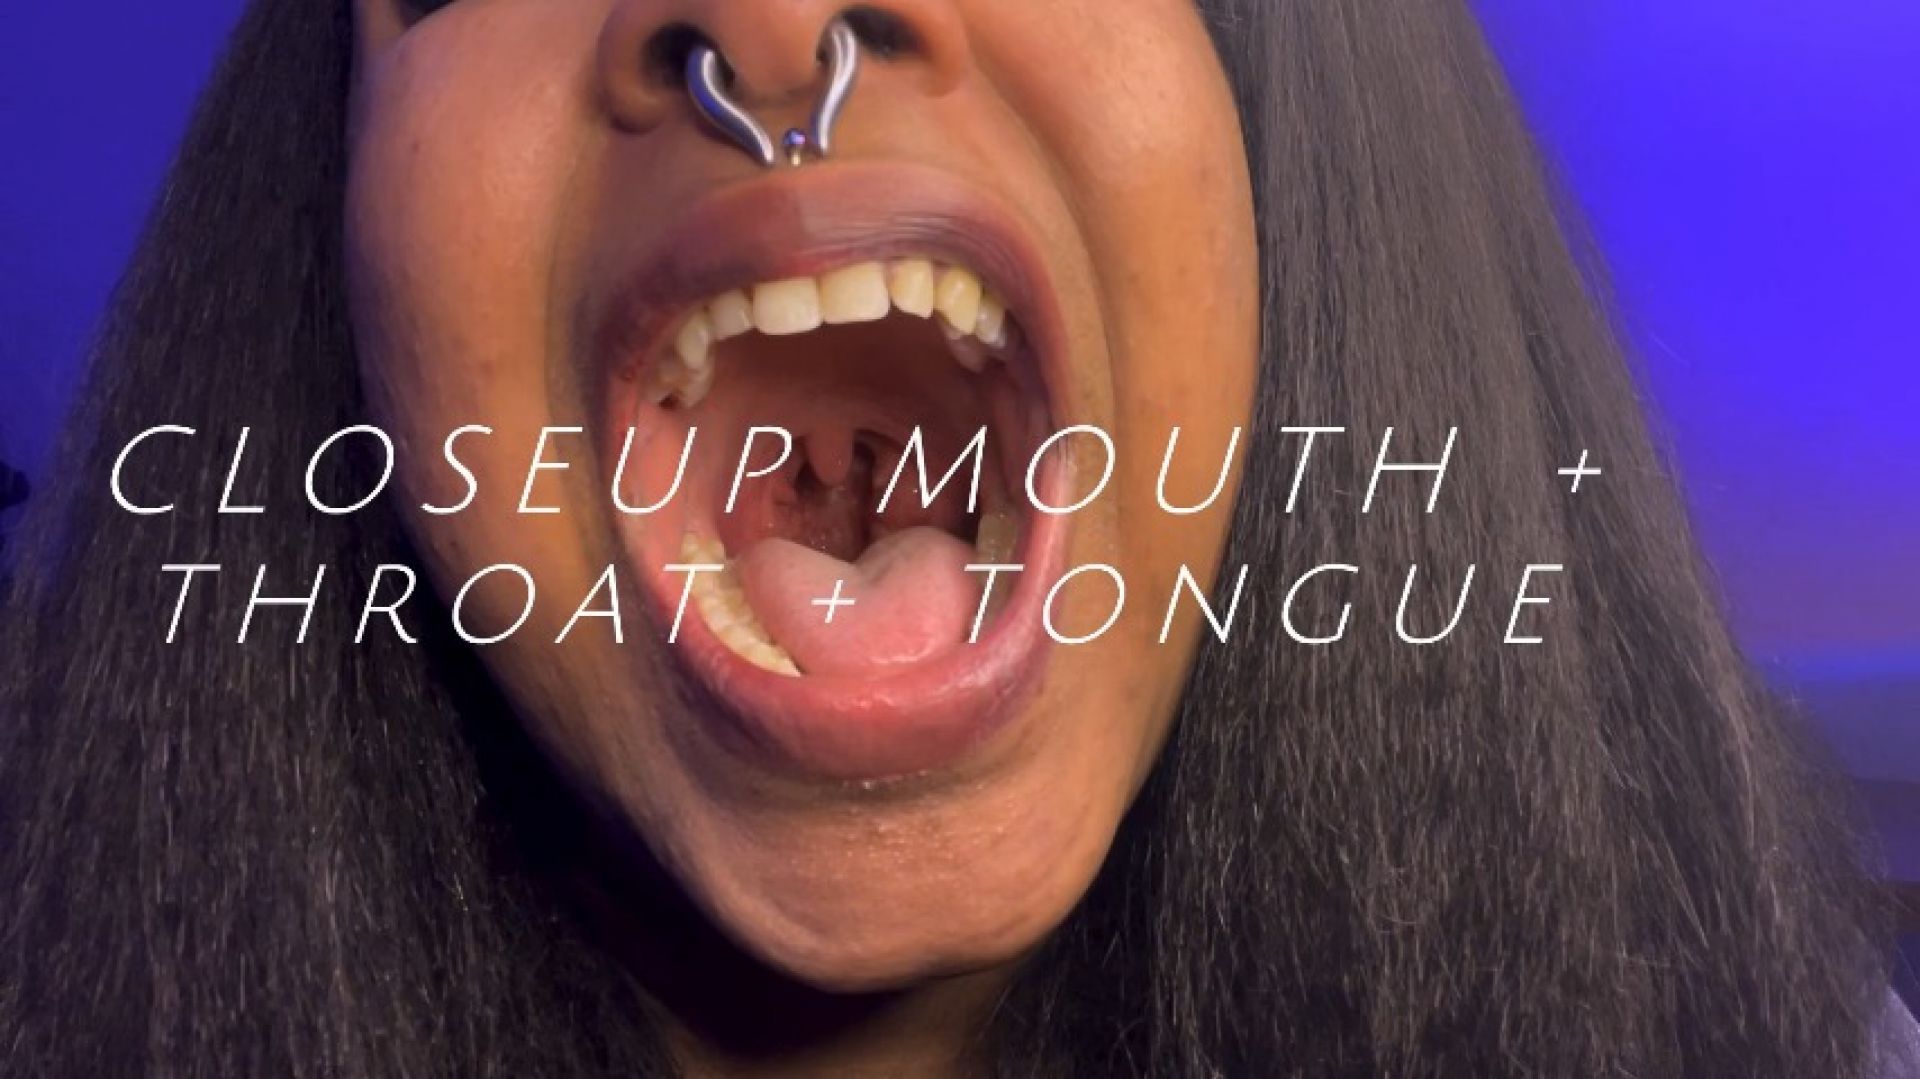 Mouth + Throat Closeups